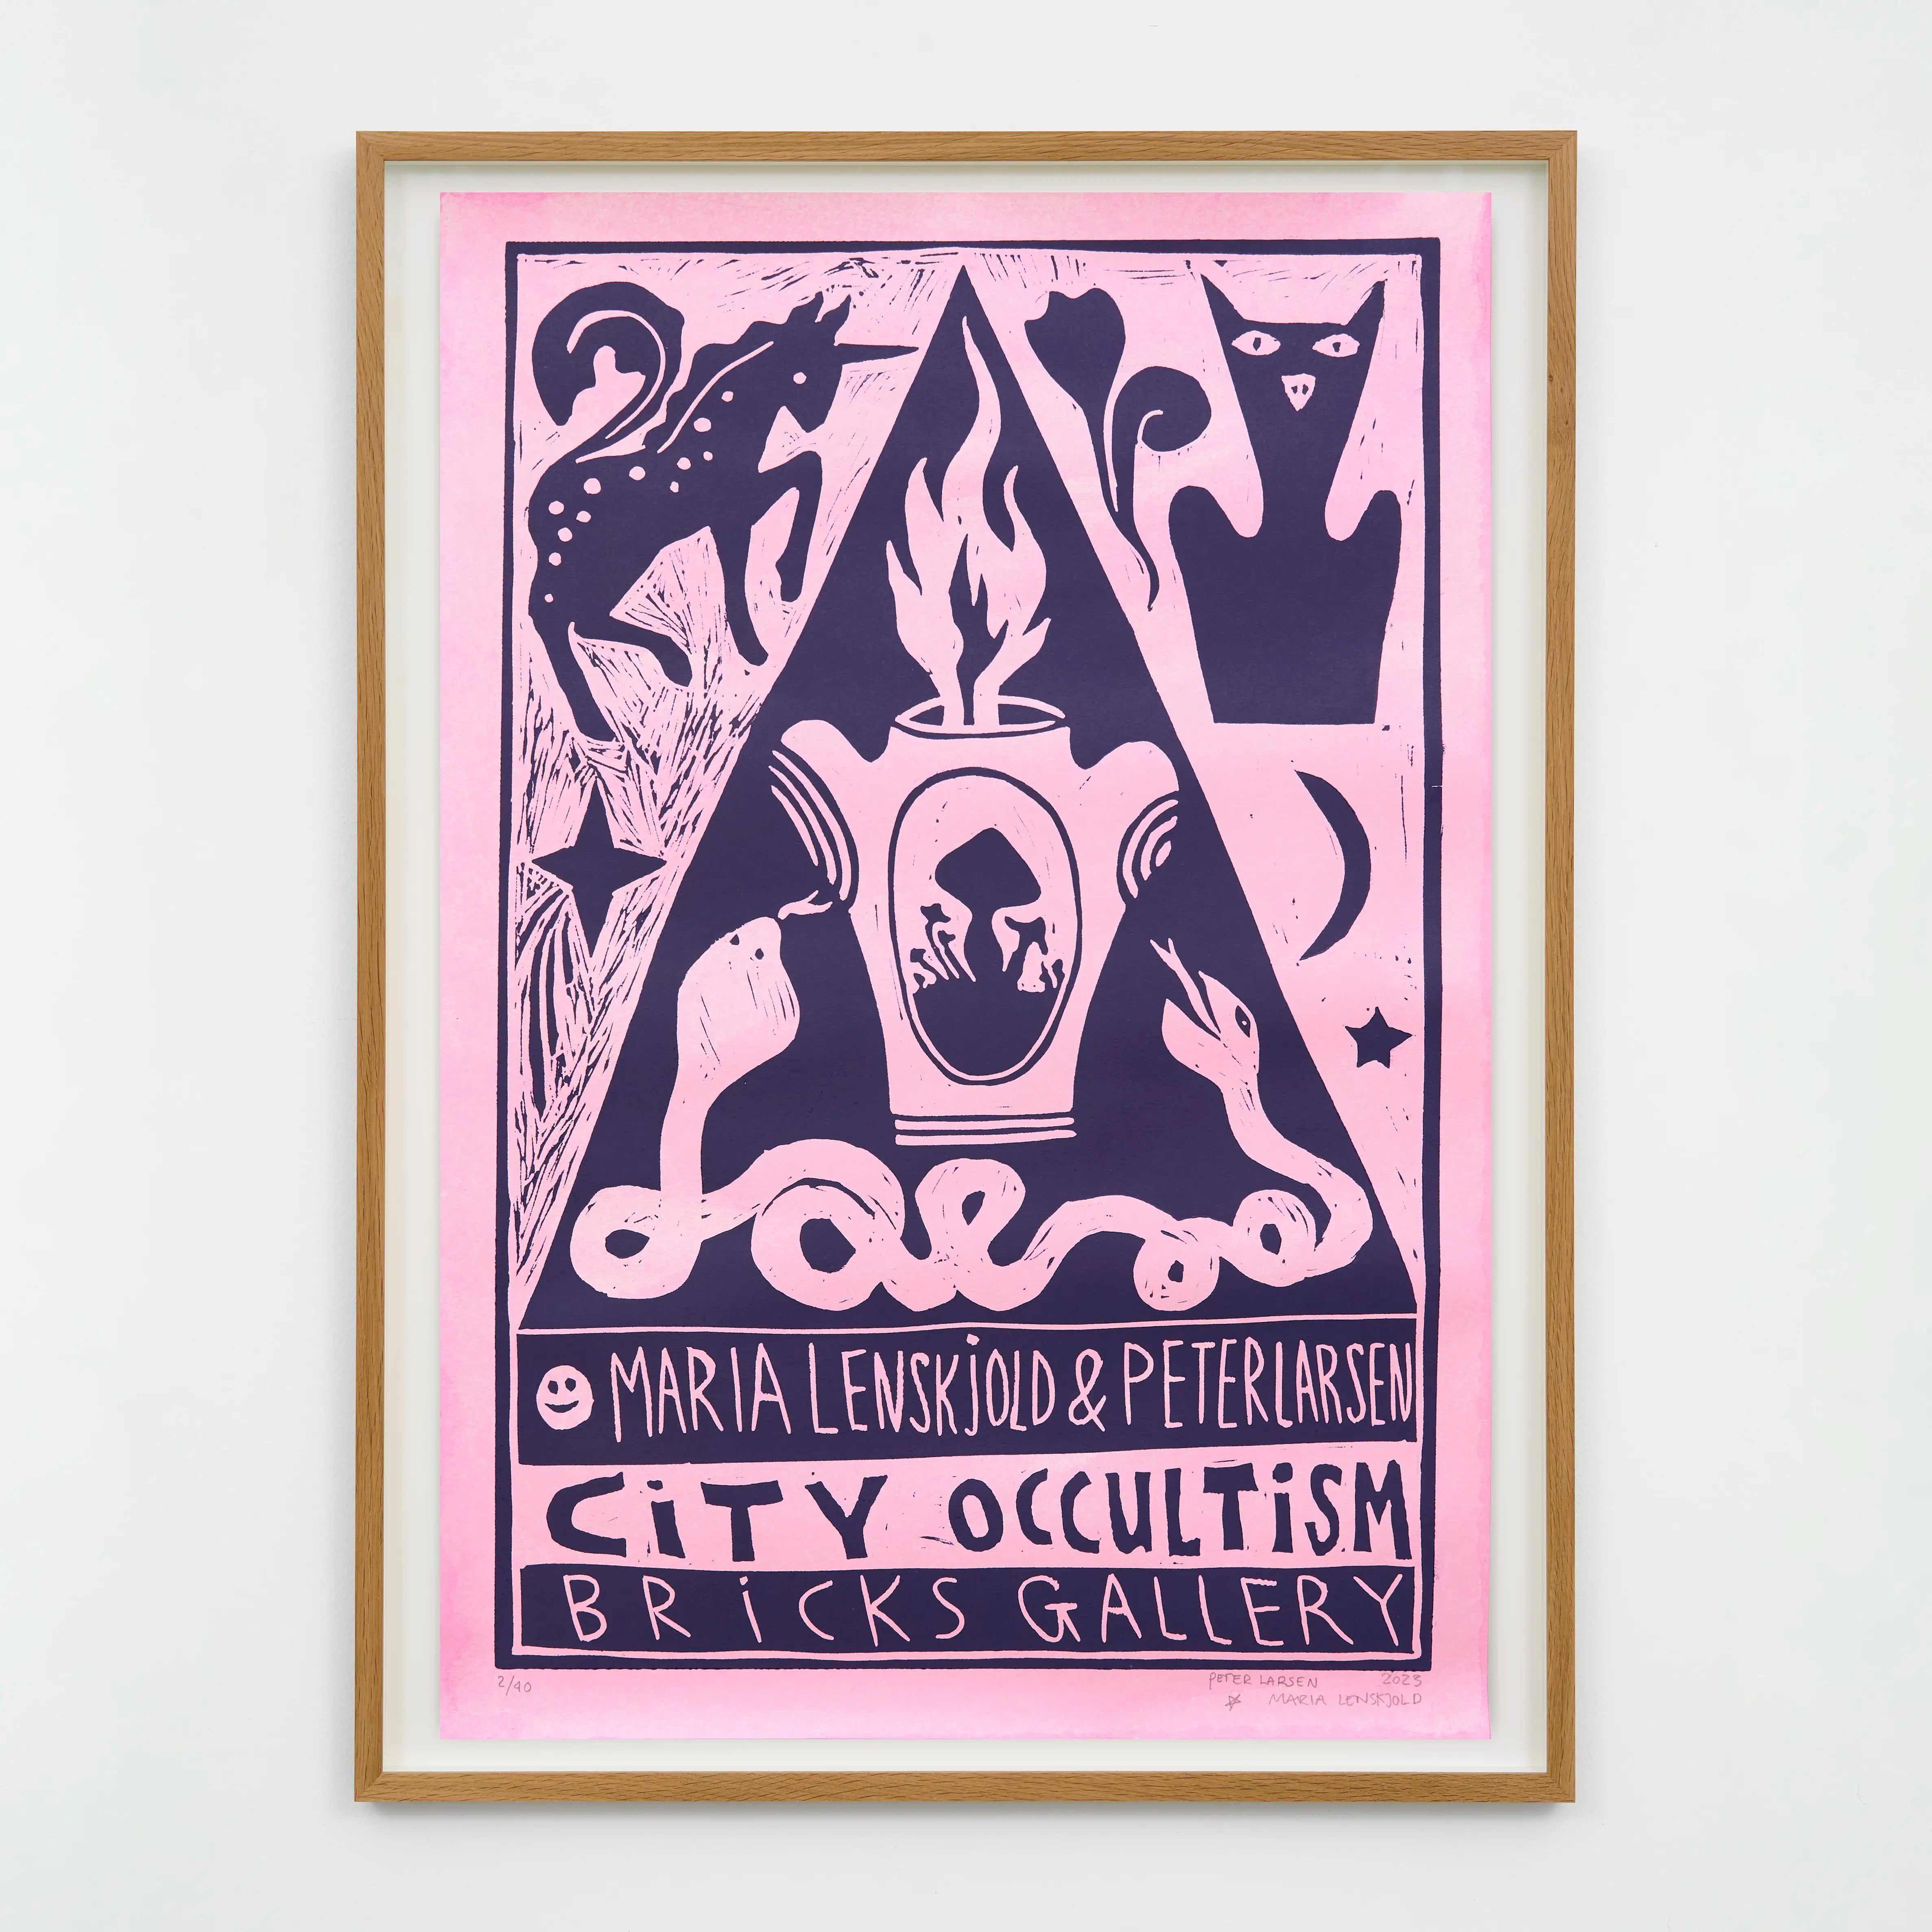 Peter Larsen & Maria Lenskjold - City Occultism Exhibition